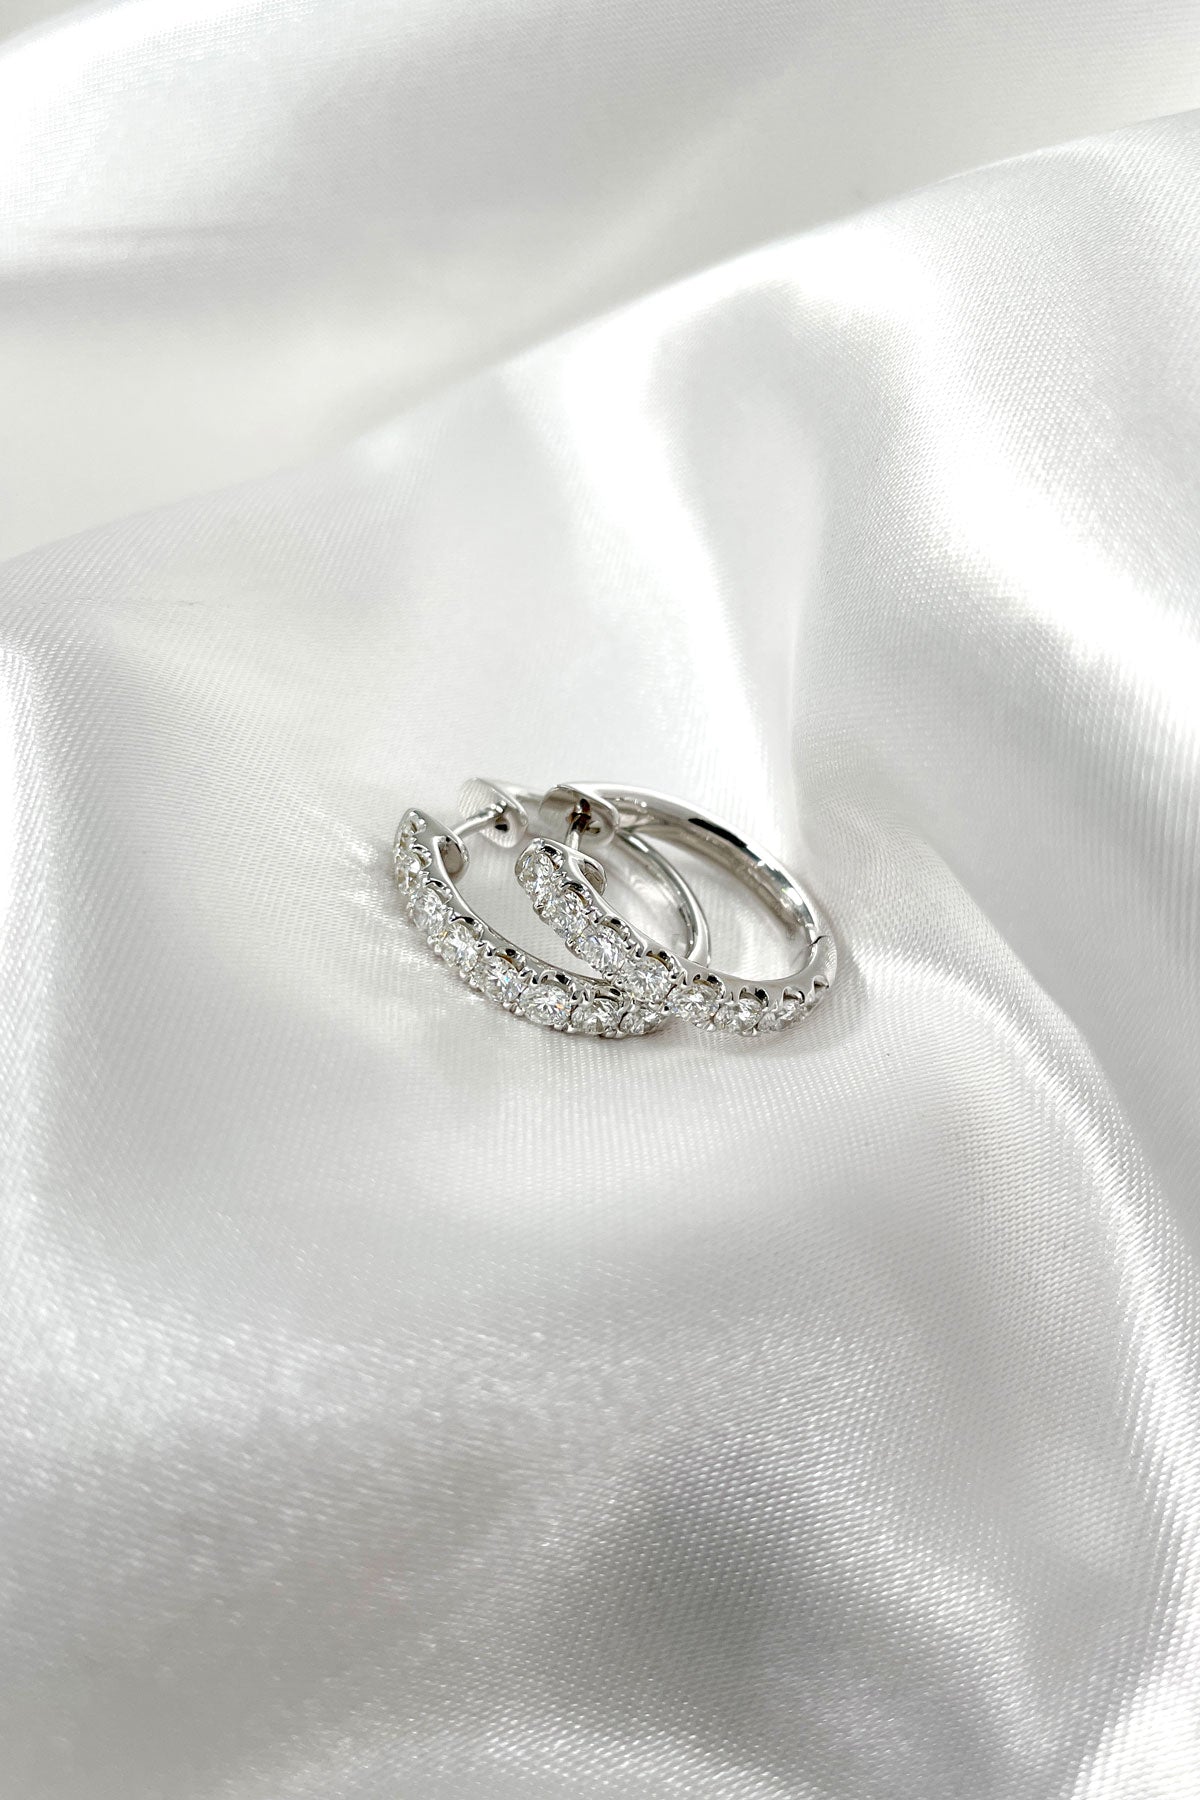 18 Carat White Gold Diamond Set Oval Huggie Earrings available at LeGassick Diamonds and Jewellery Gold Coast, Australia.